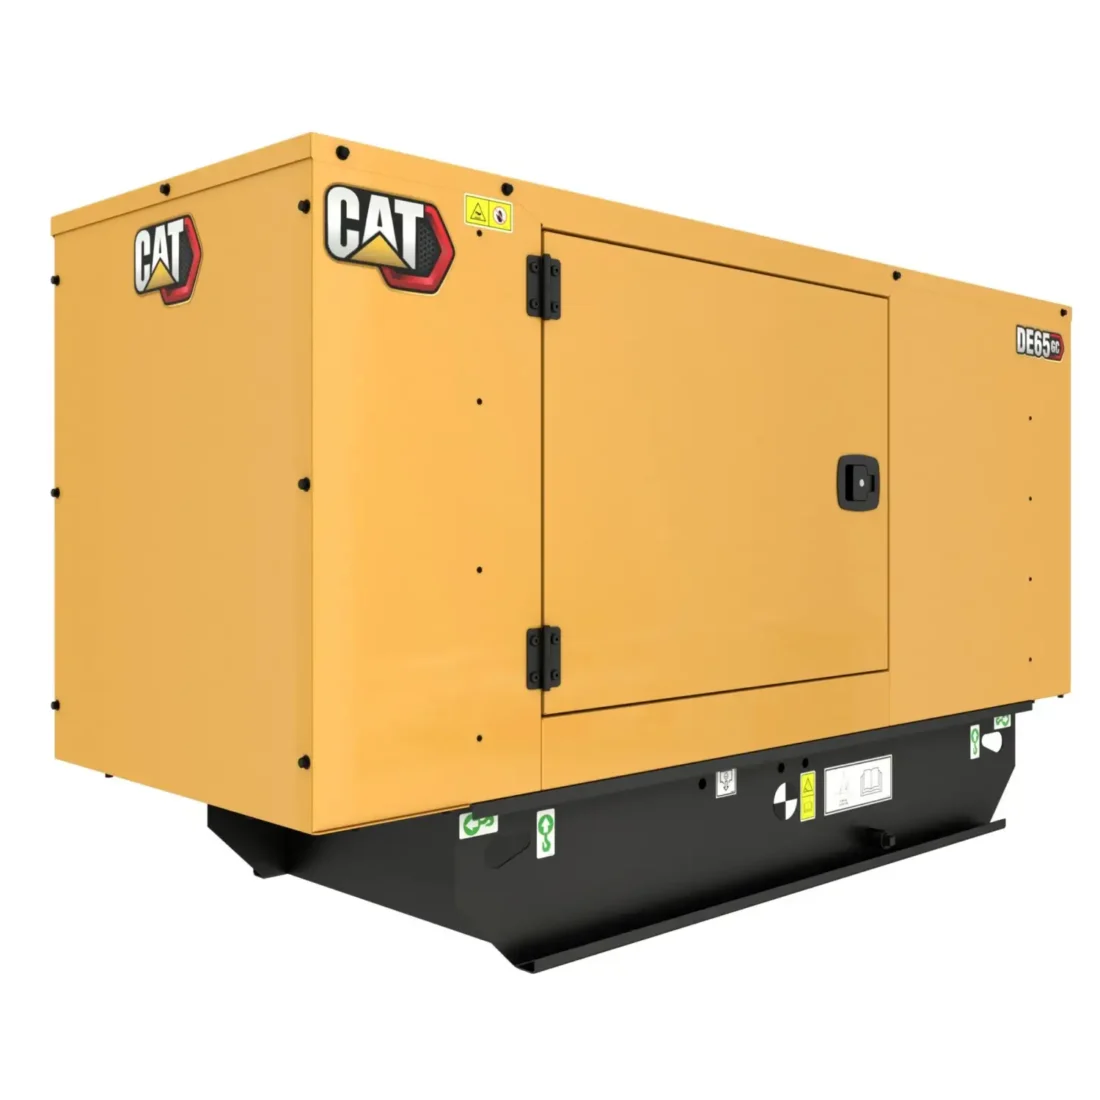 CAT DE65 GC 65kVA Diesel Generator